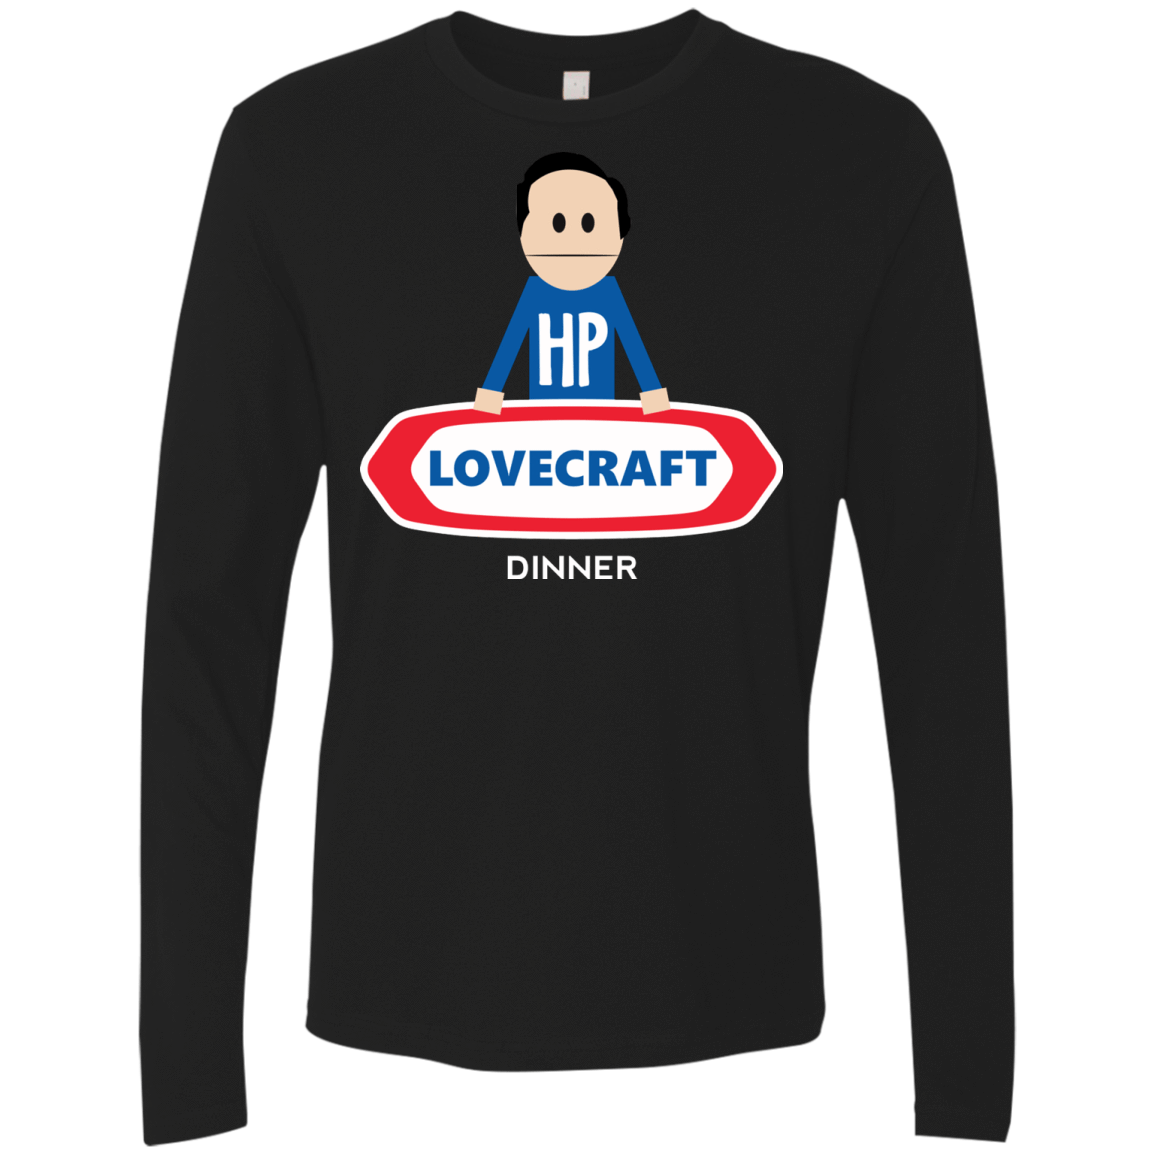 T-Shirts Black / Small HP LoveCraft Dinner Men's Premium Long Sleeve